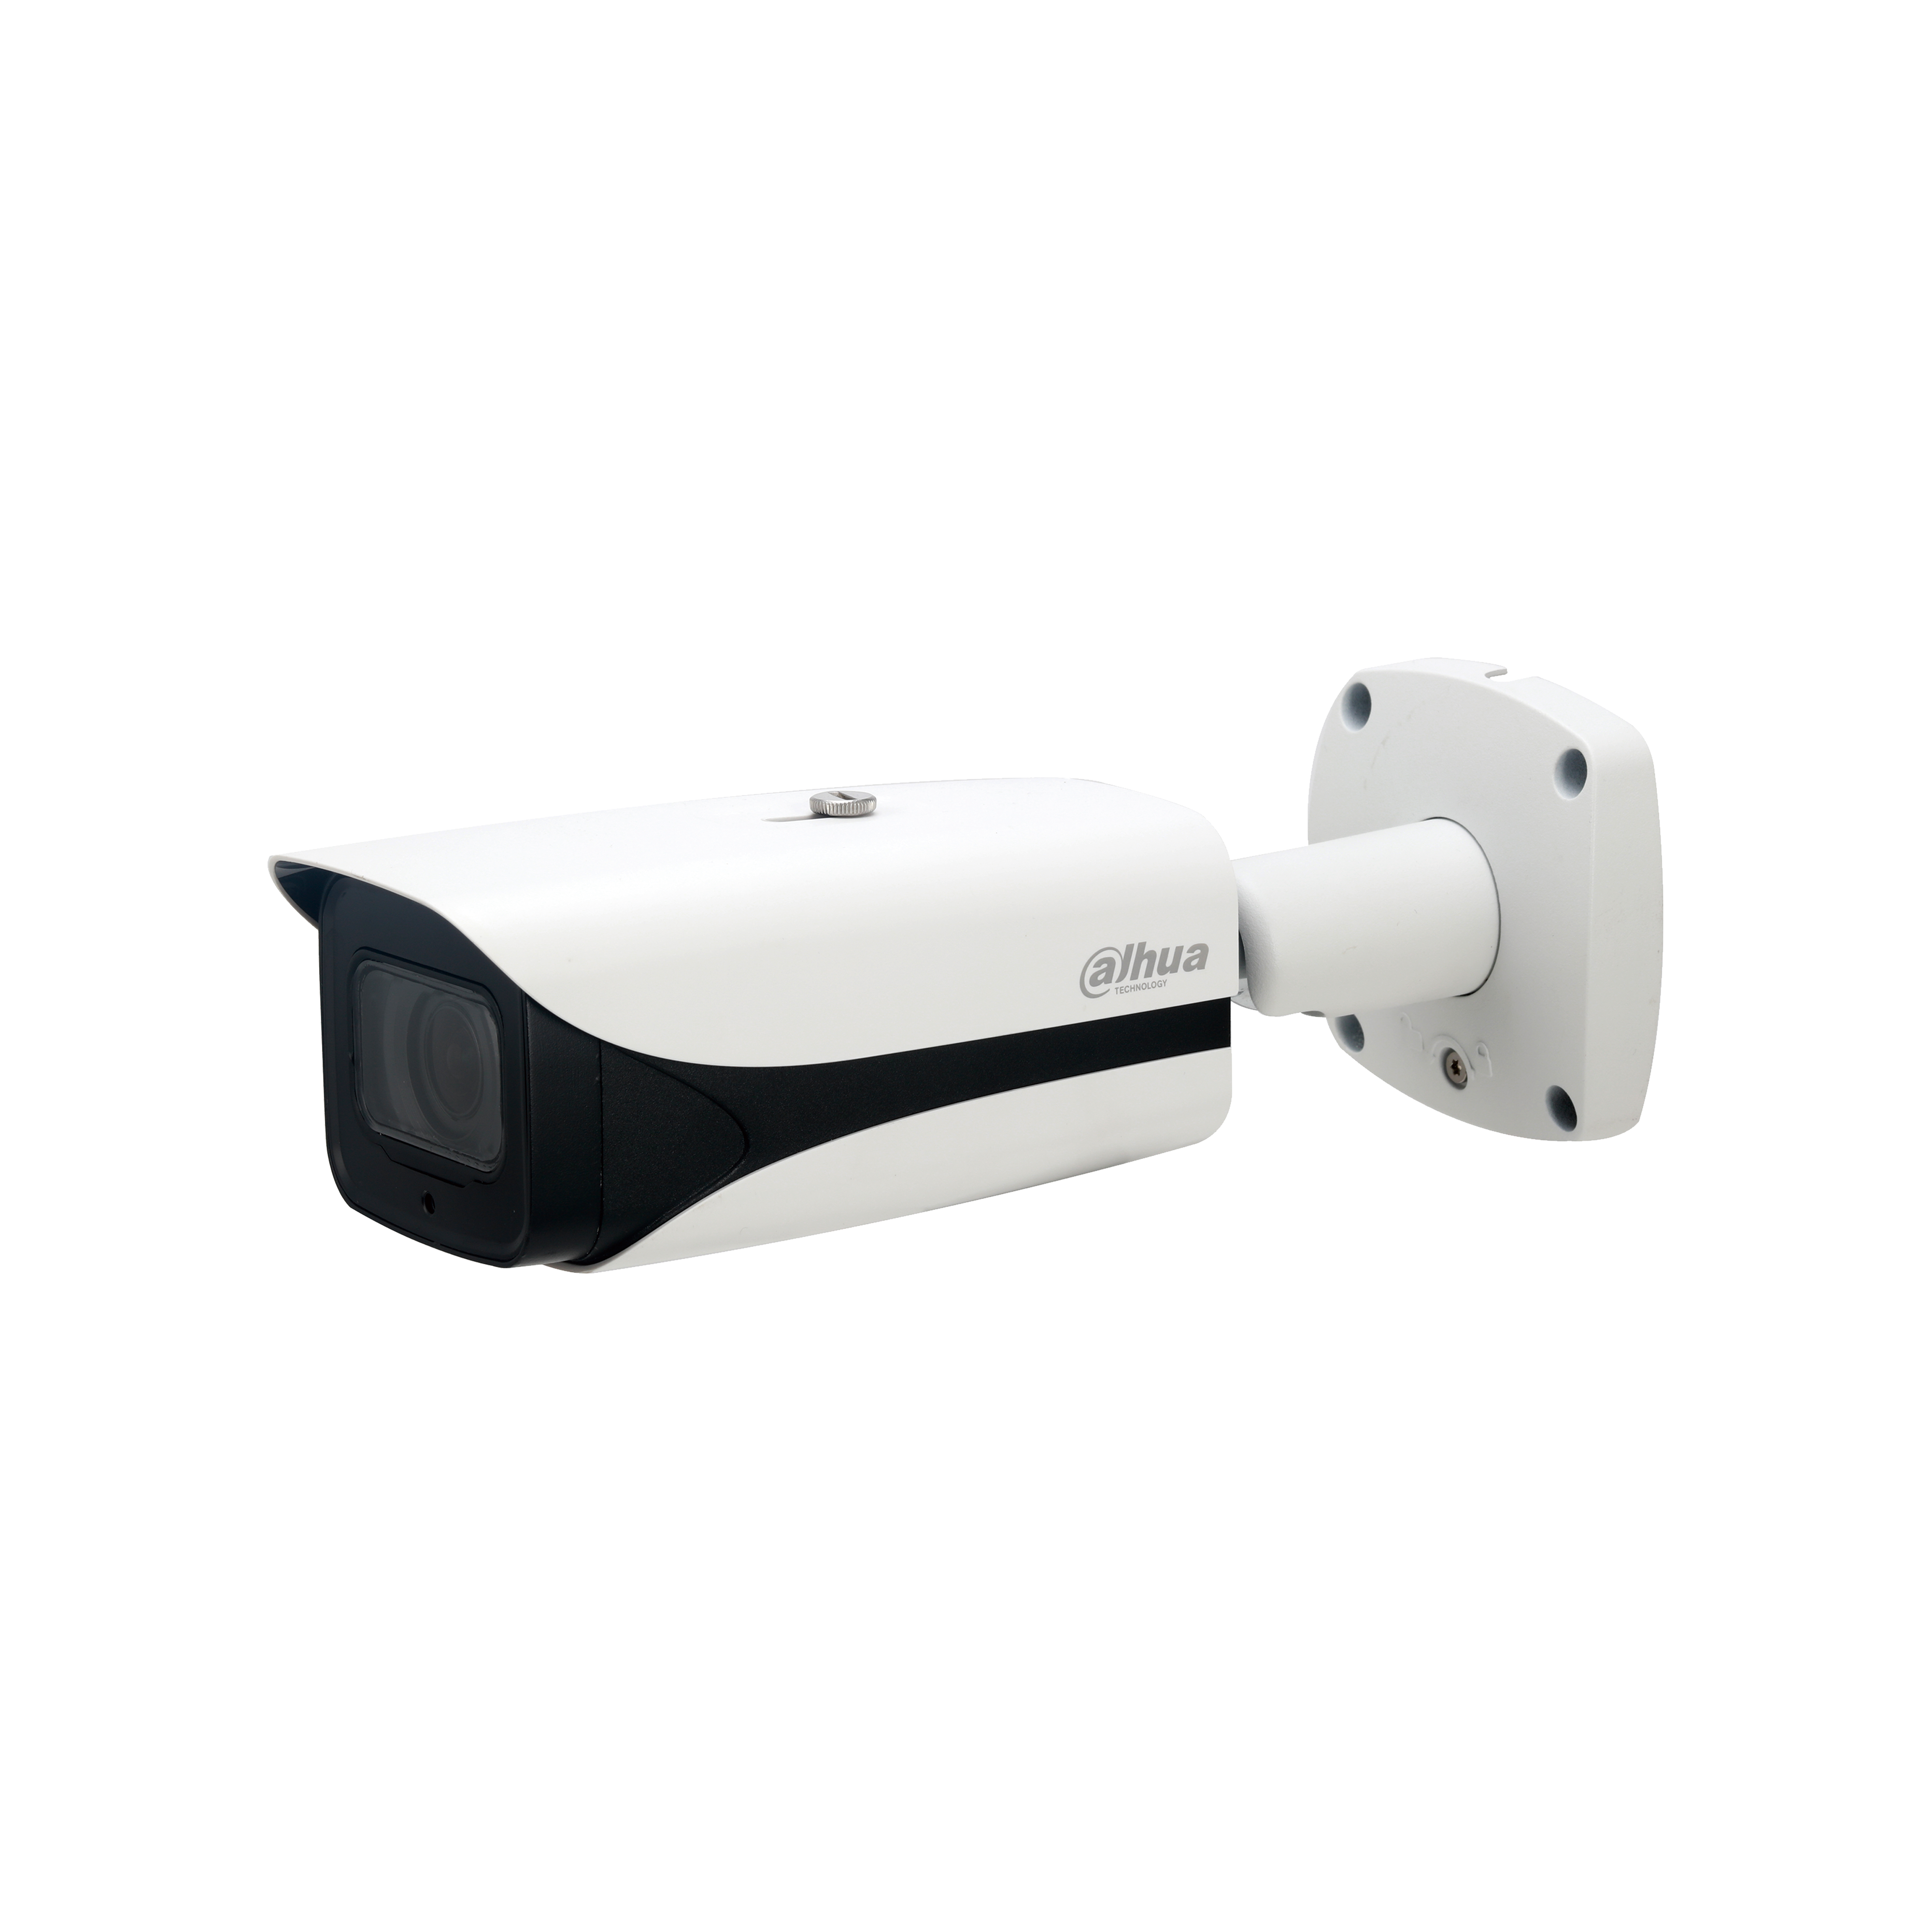 DAHUA IPC-HFW3241E-Z 2MP IR Starlight Bullet Network Camera